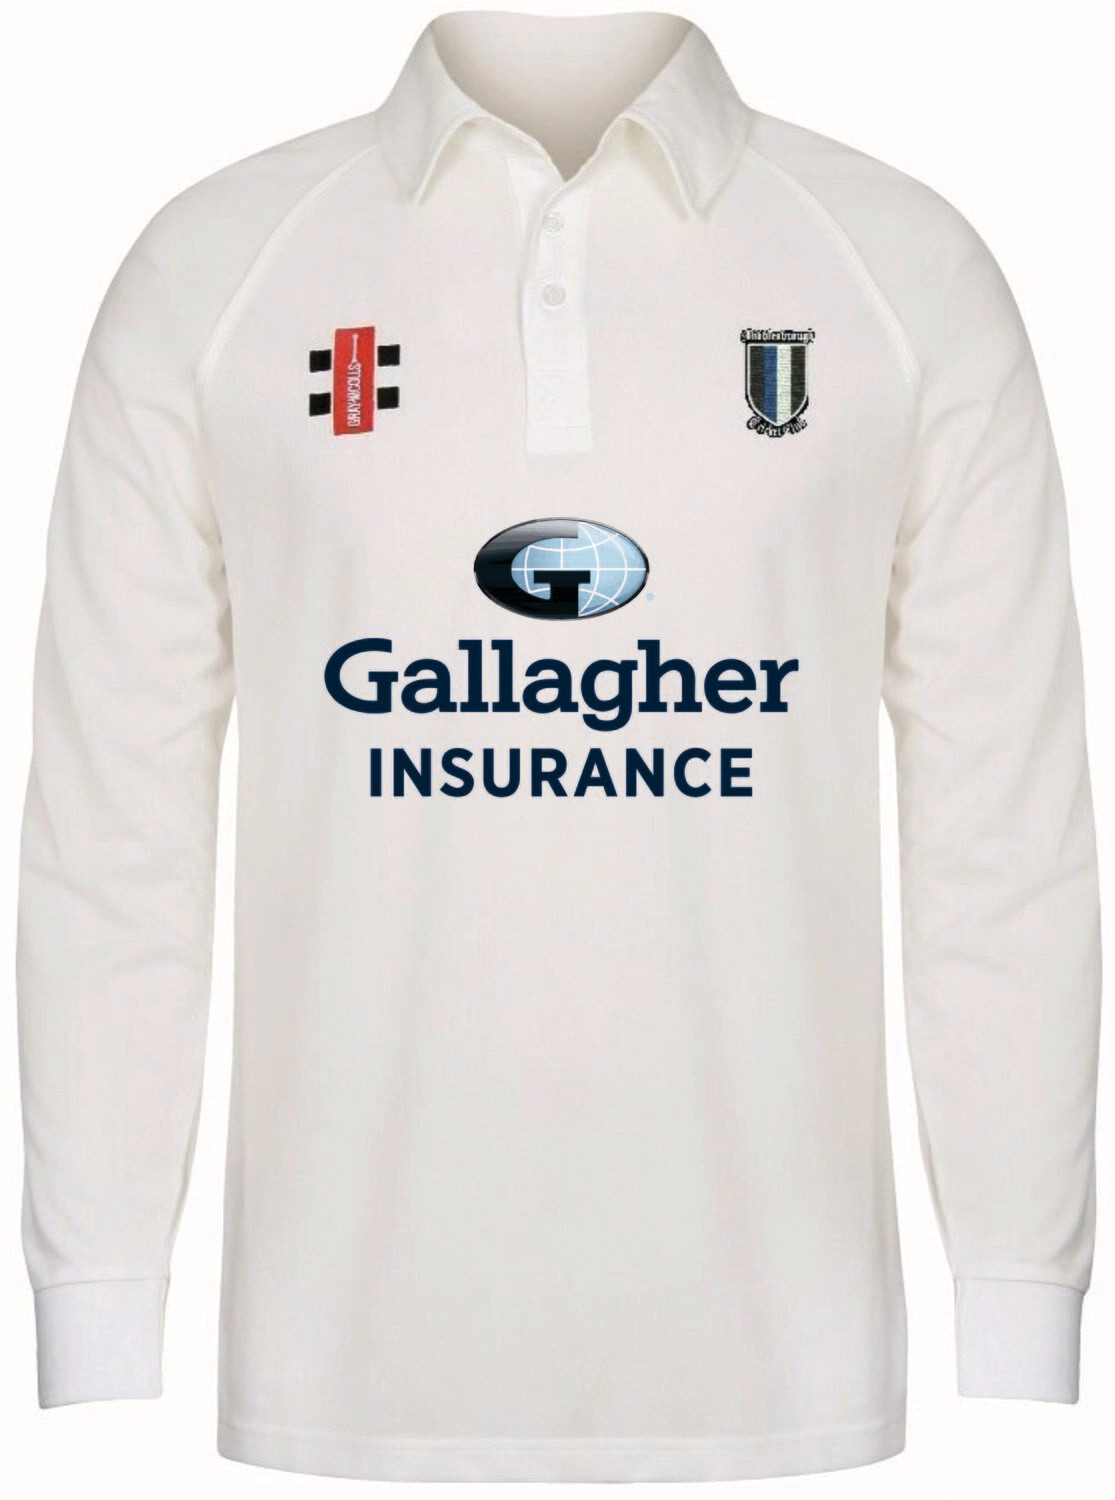 Middlesbrough Matrix Long Sleeve Cricket Shirt - Adult Section